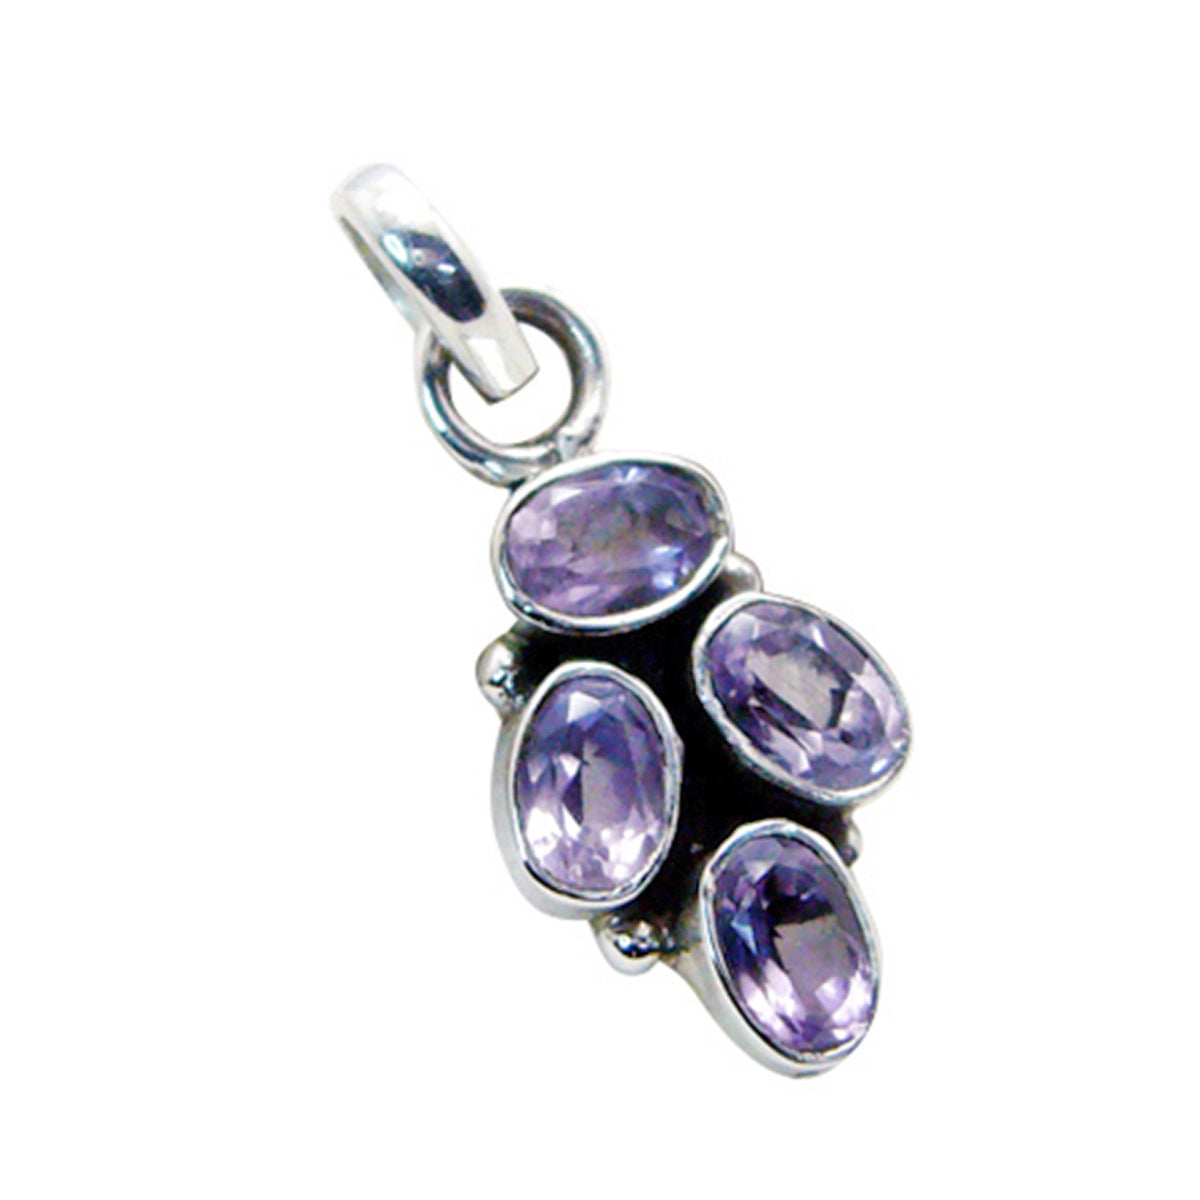 Riyo Foxy Gemstone Oval Faceted Purple Amethyst Sterling Silver Pendant Gift For Friend